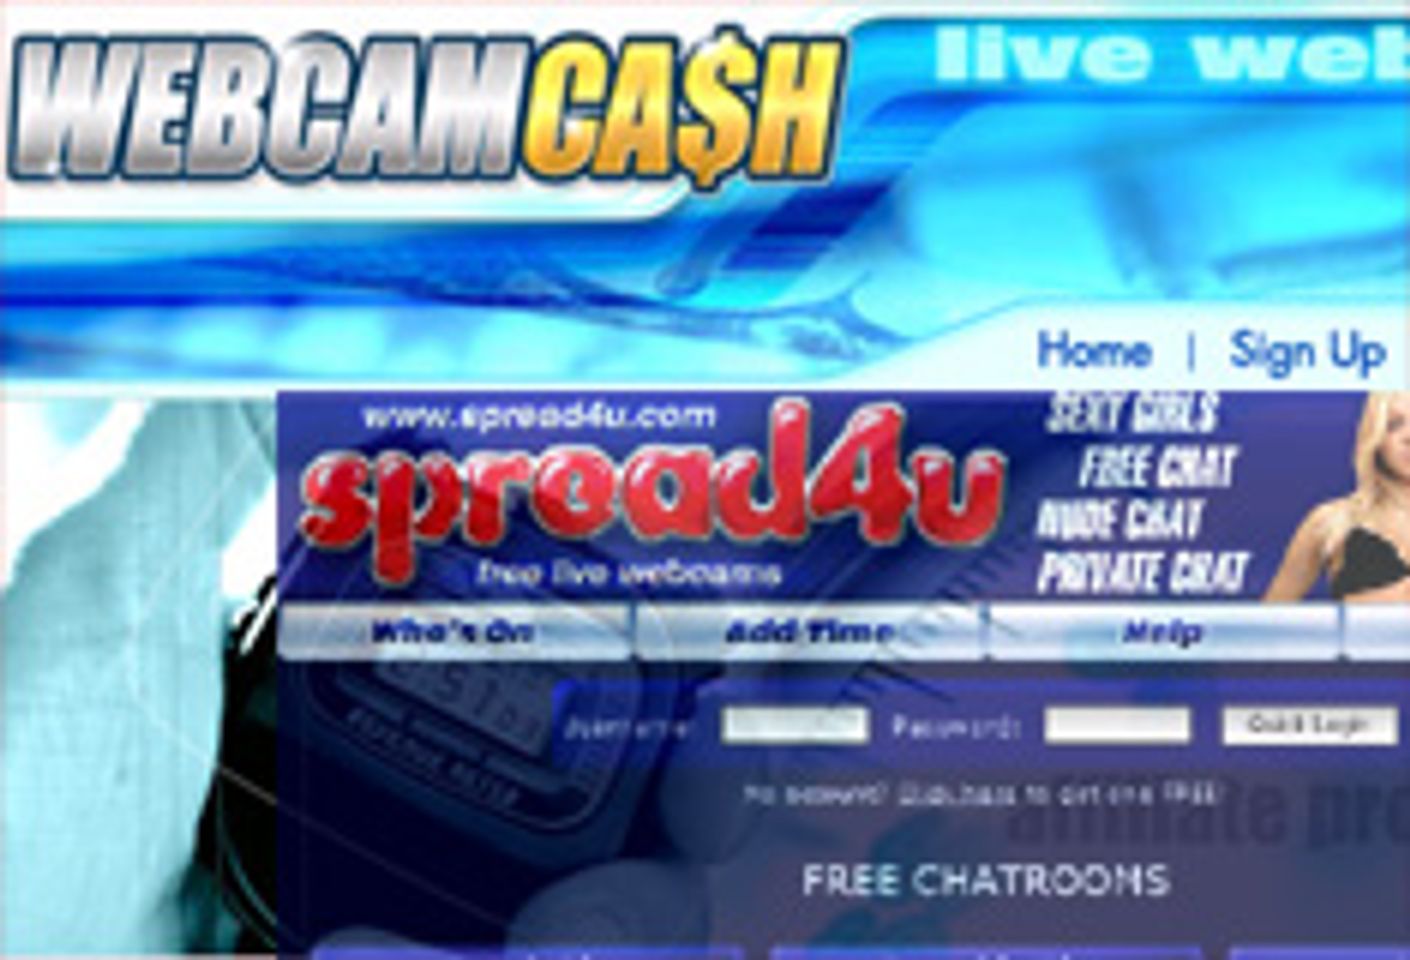 WebcamCash And Spread4U Add Derek Smout to Sales Team